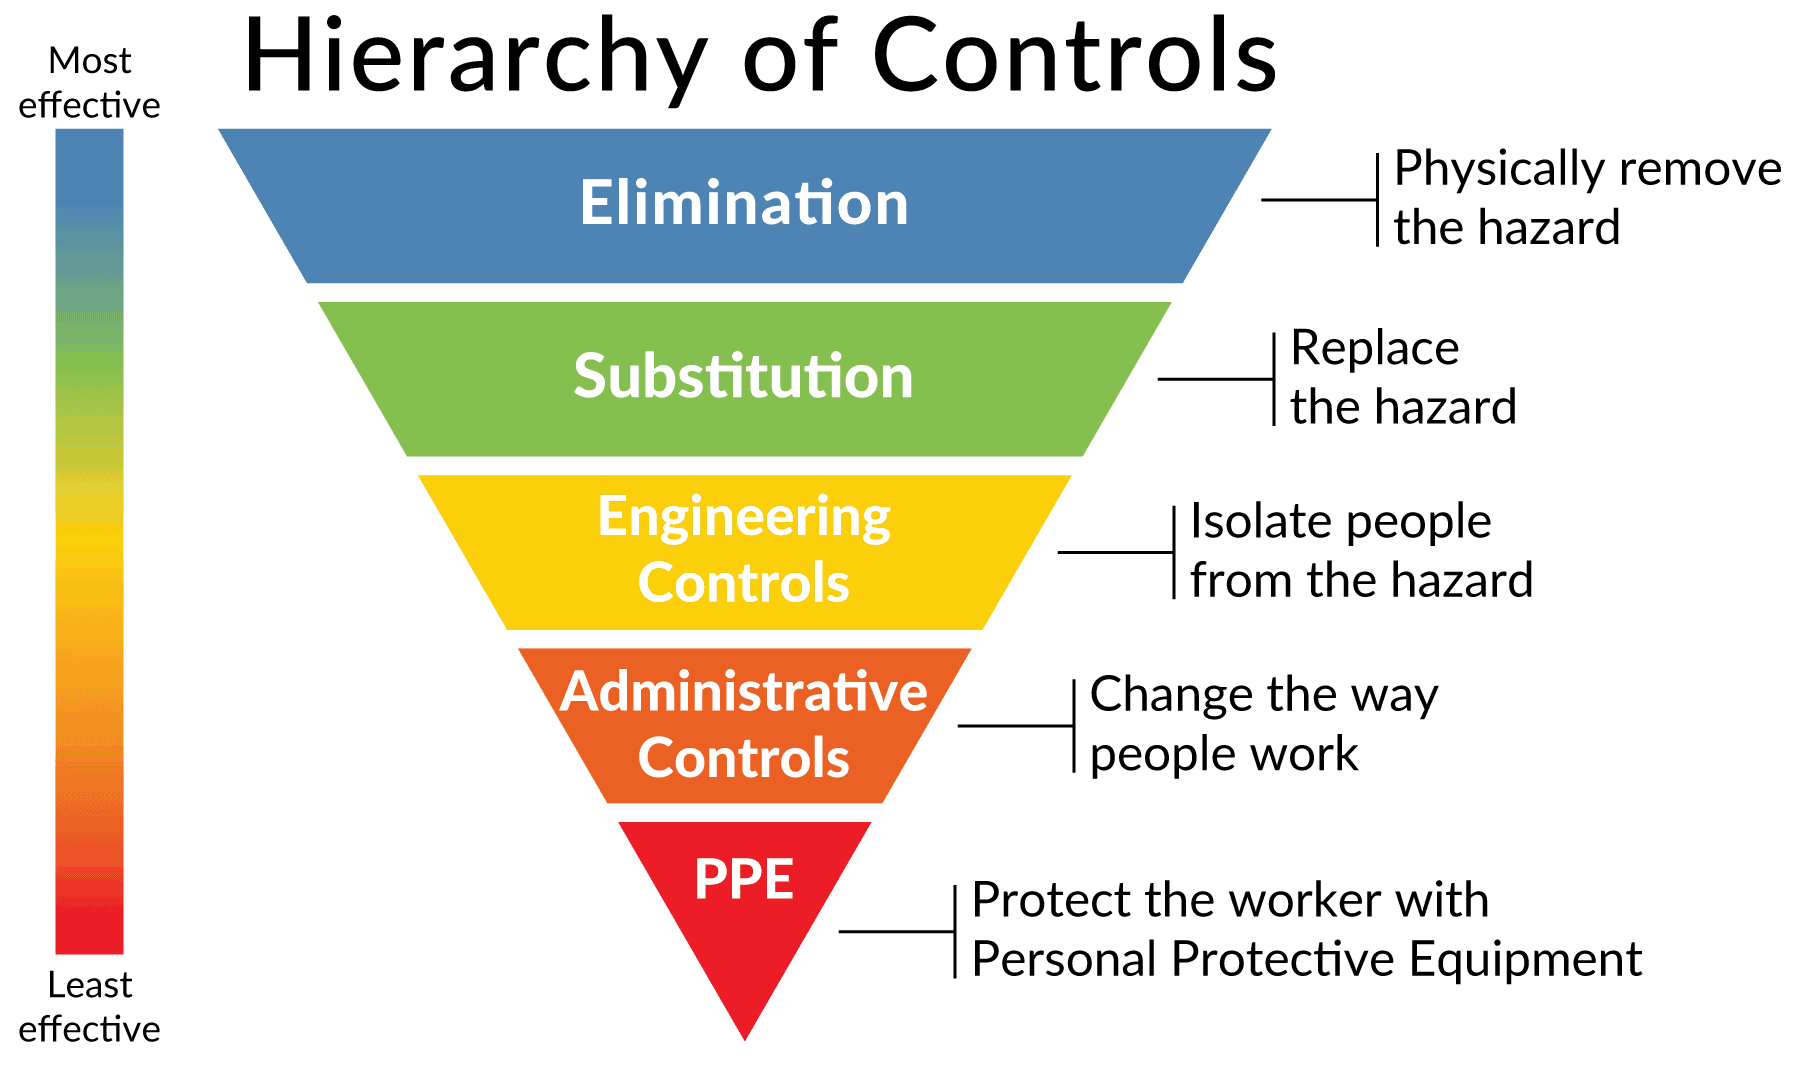 Osha Hierarchy Of Controls Makesafe Tools